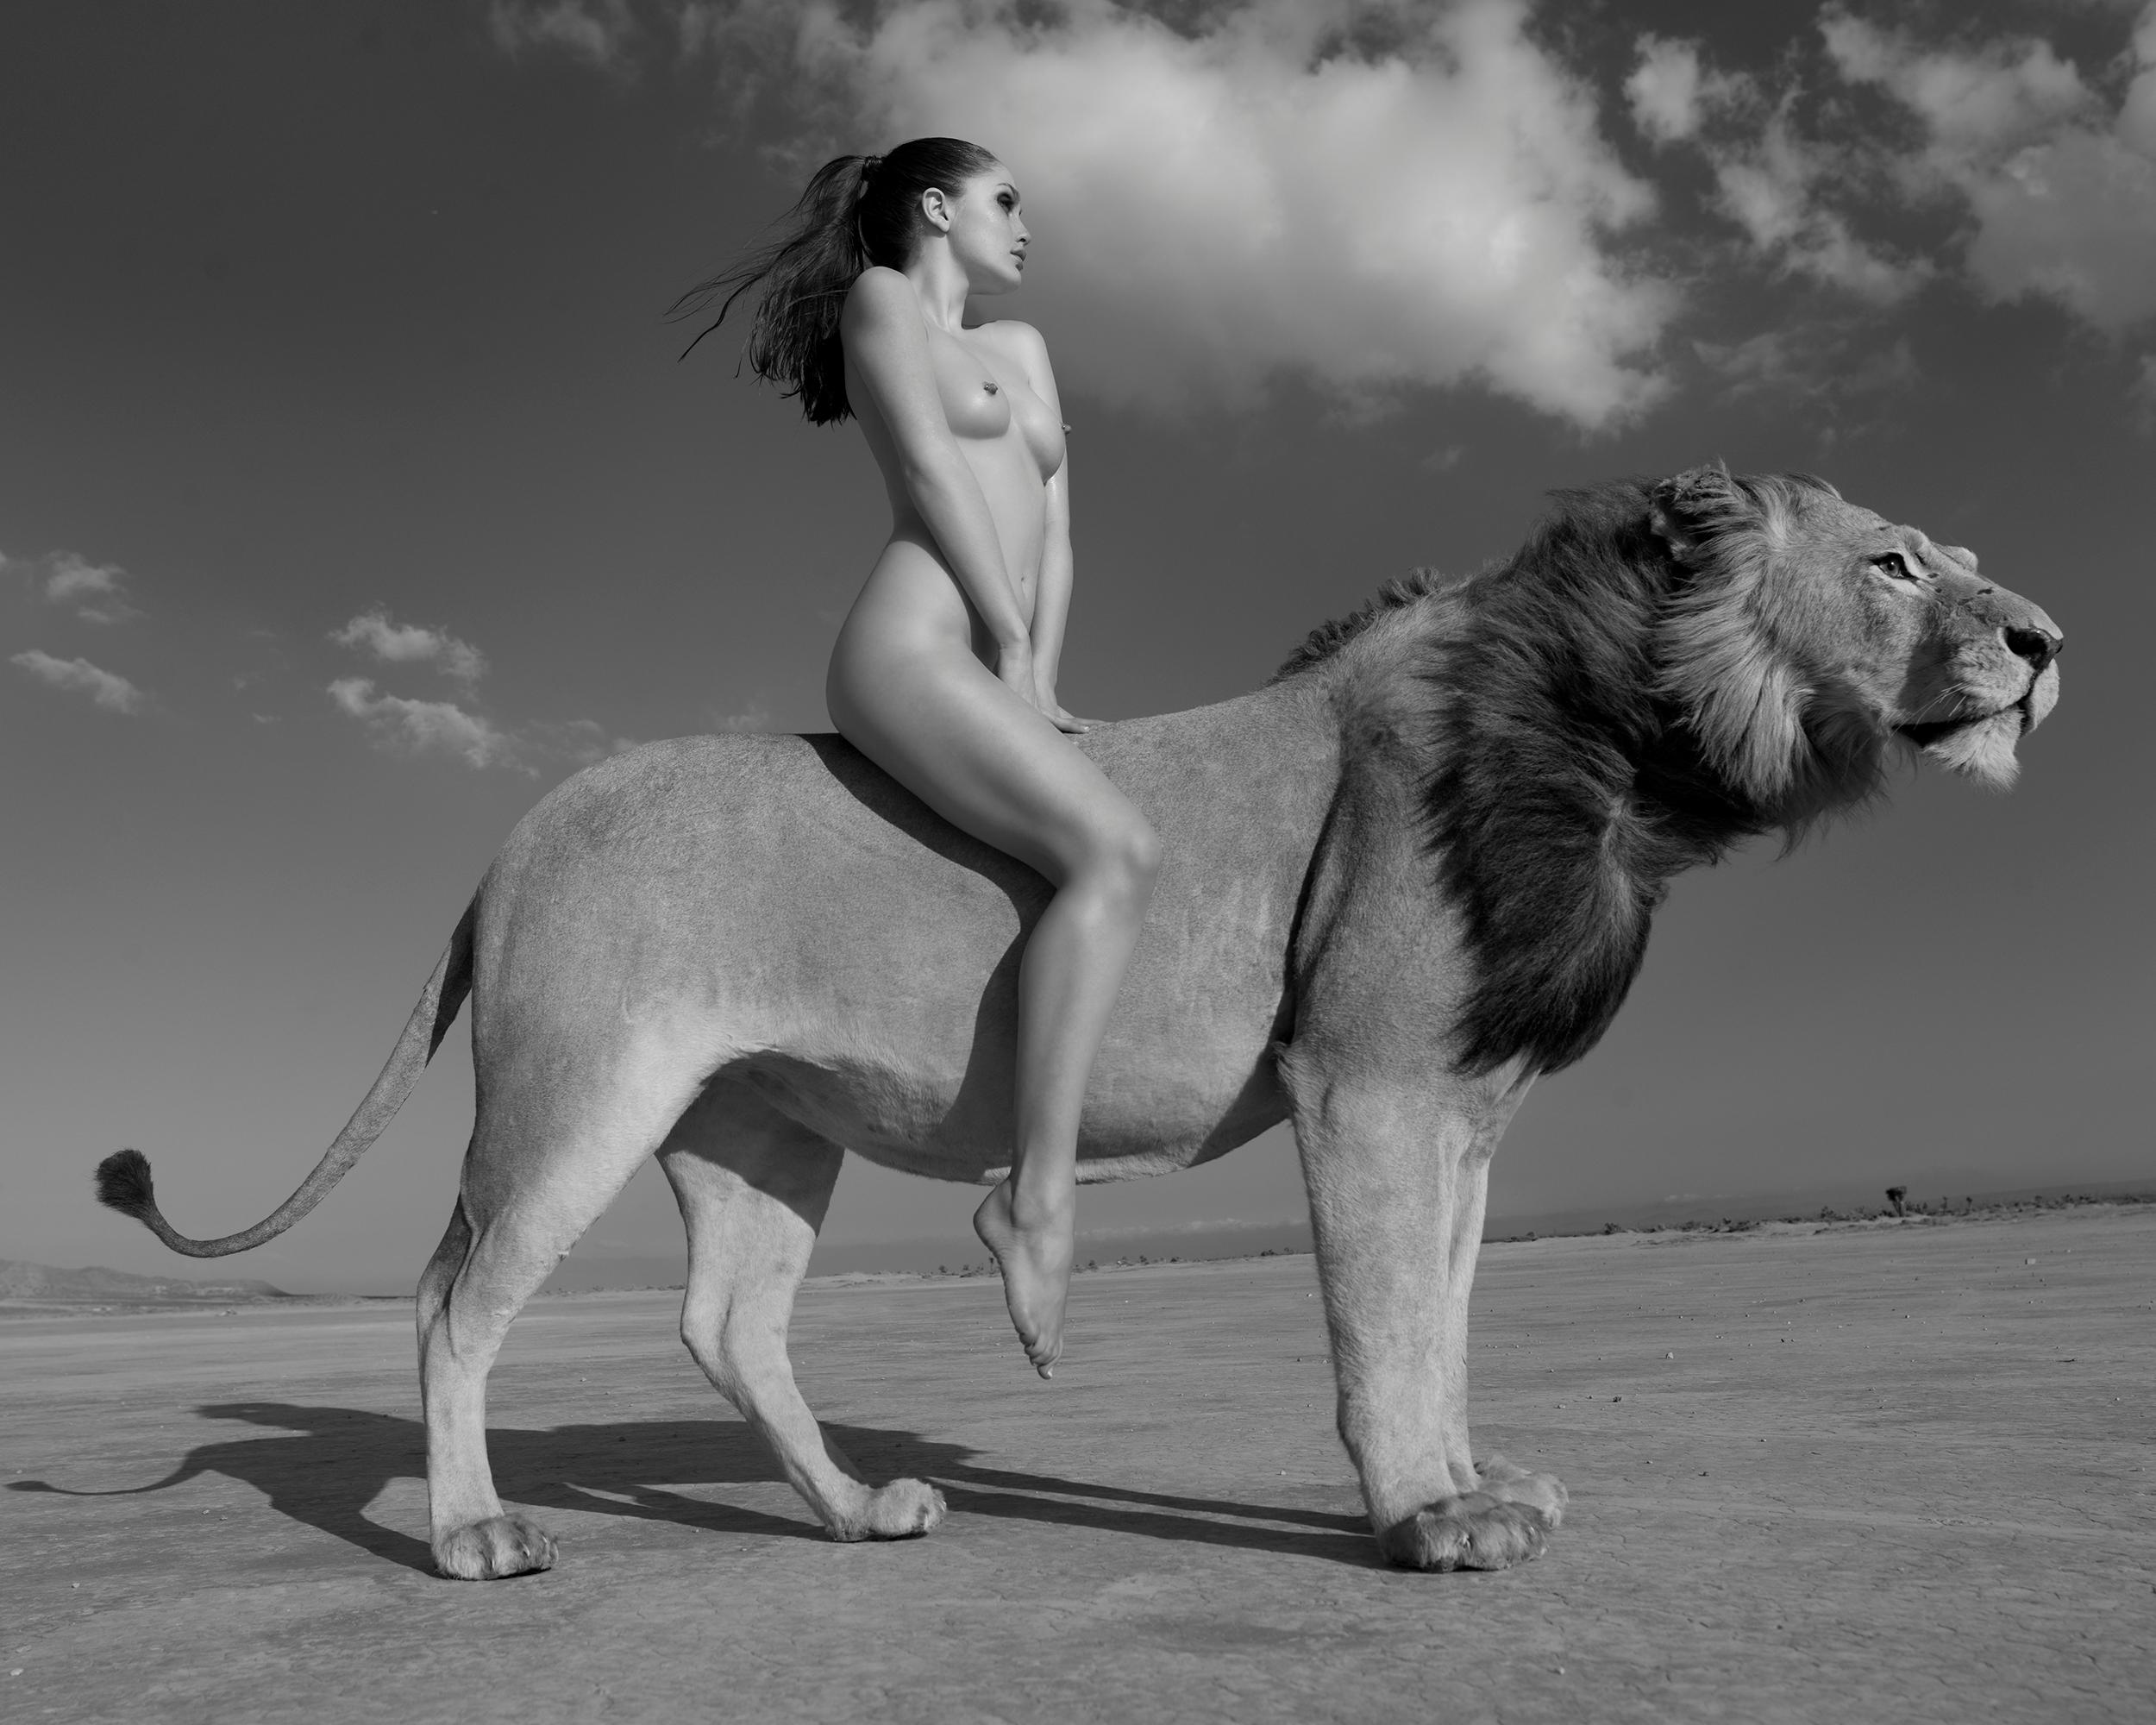 Sylvie Blum Black and White Photograph - Angela rides the Lion, 2008, 21st century, contemporary, photography